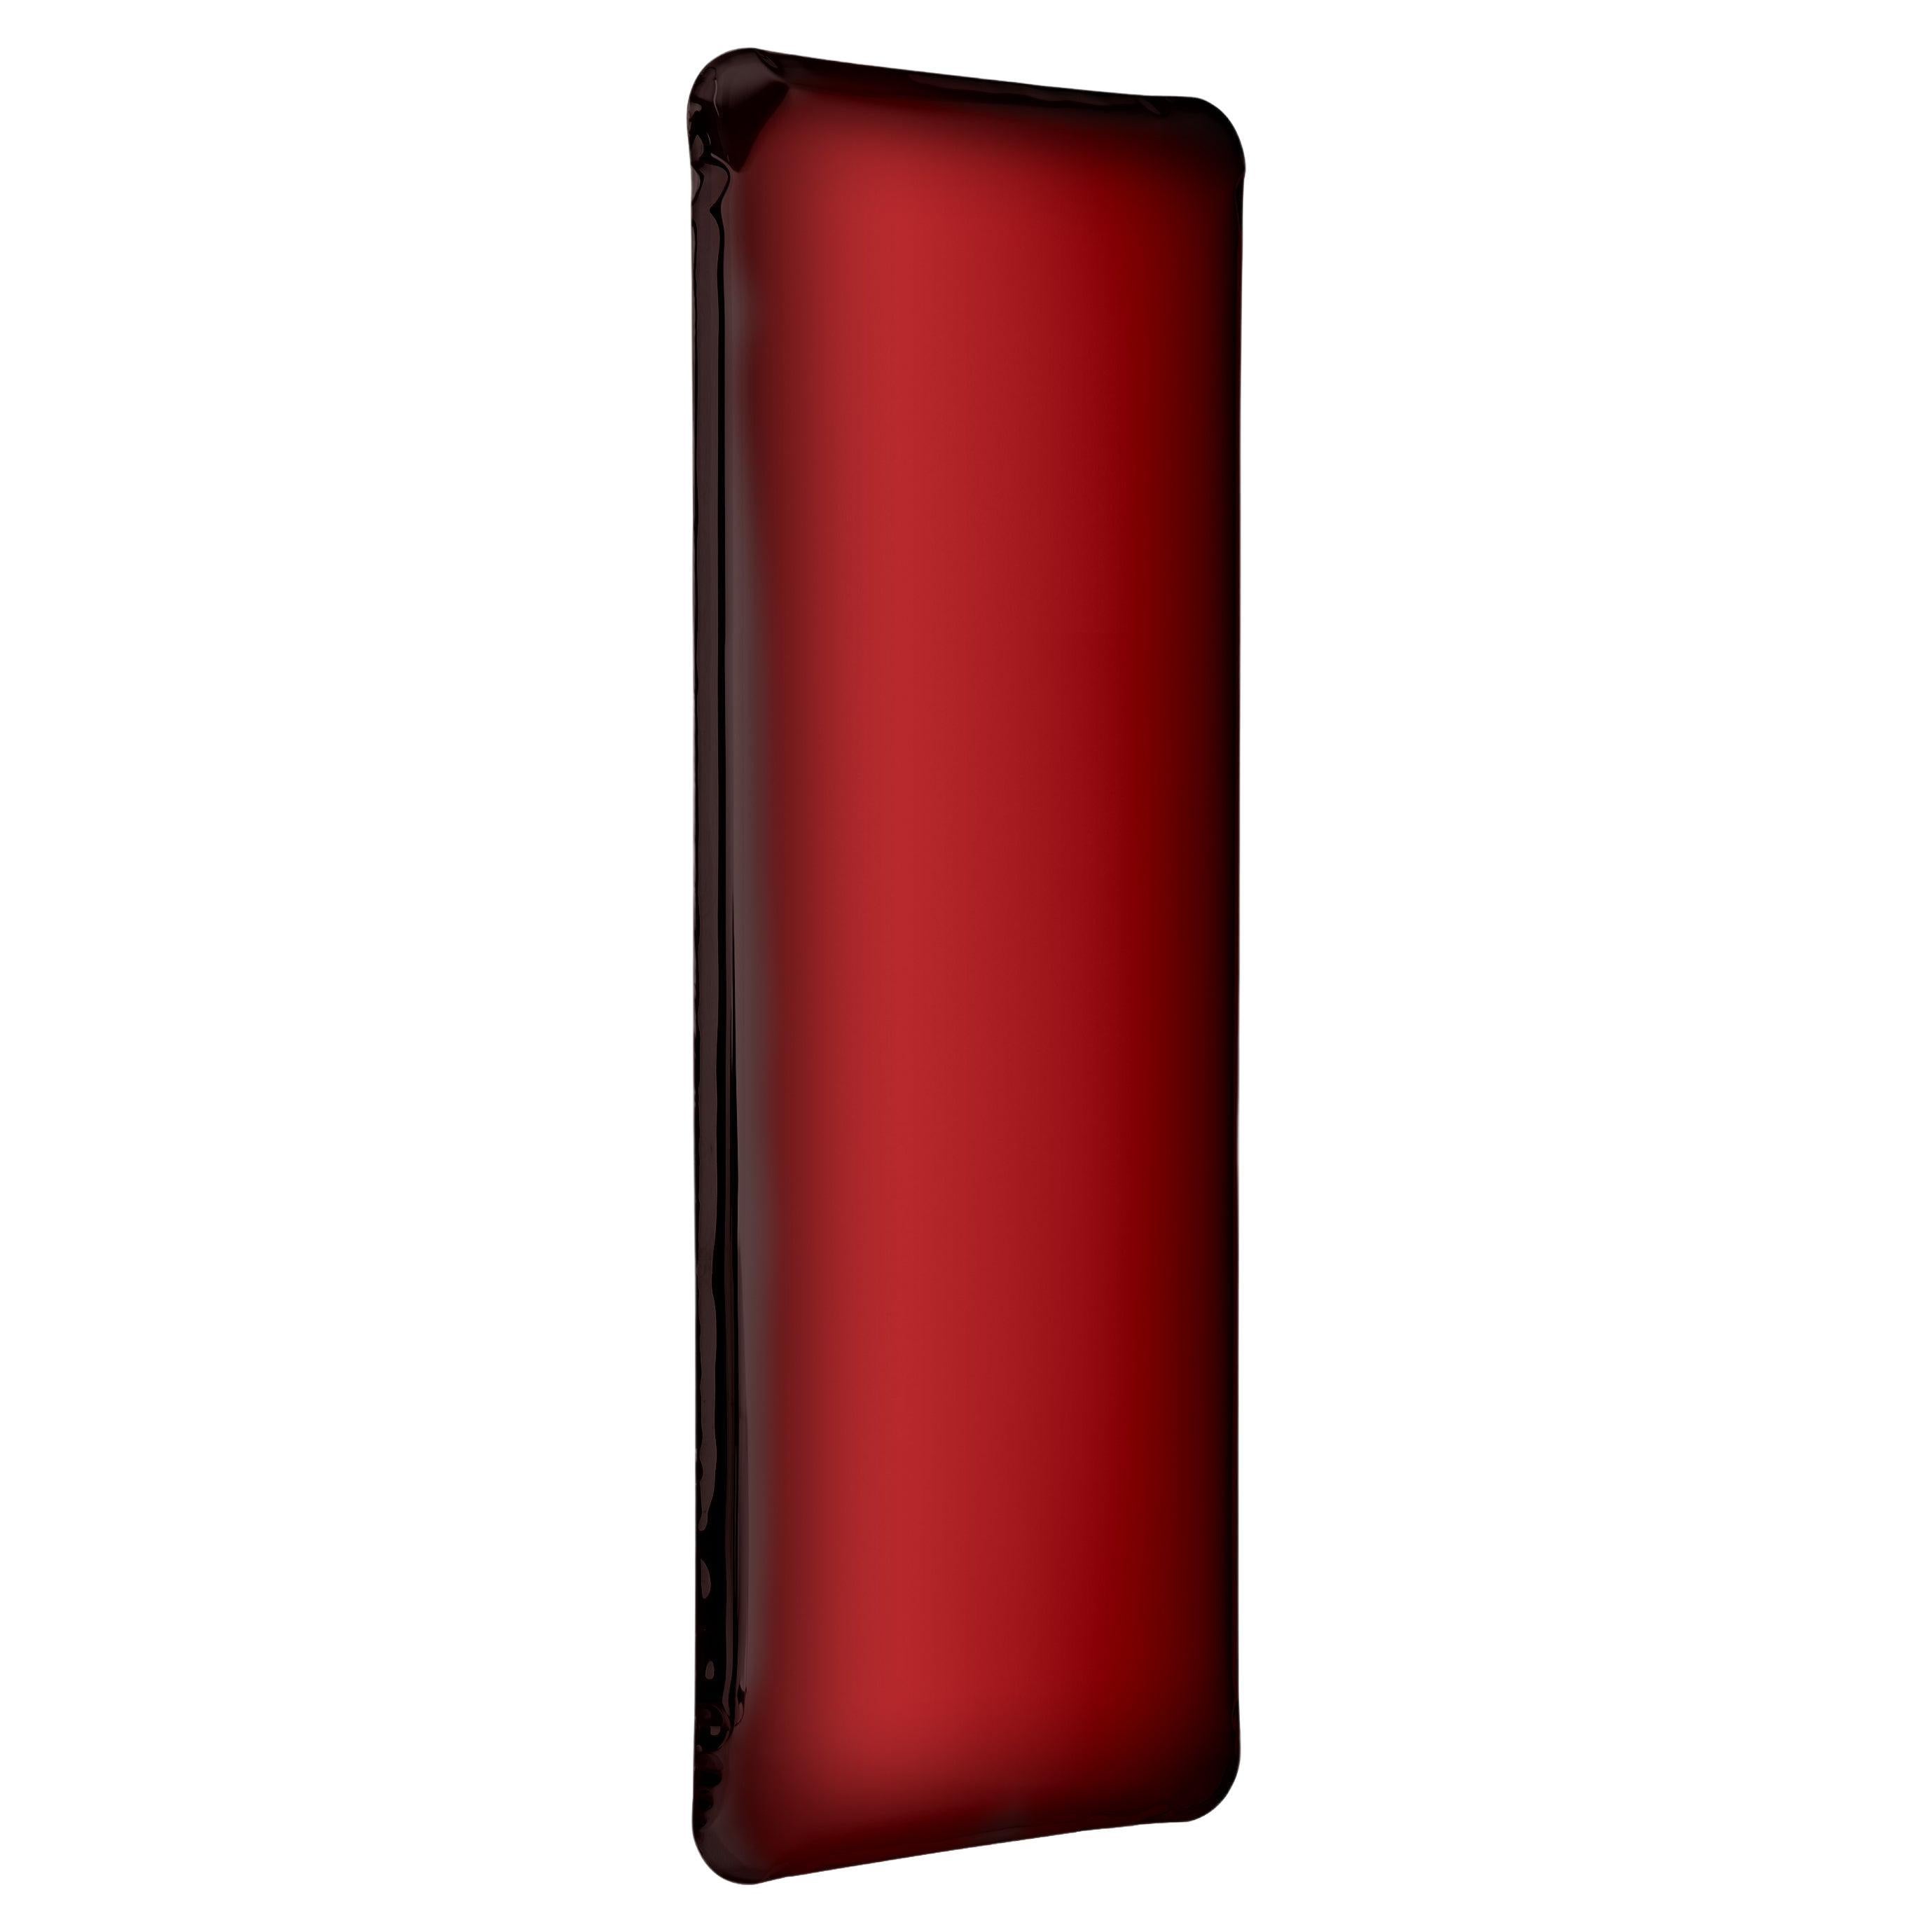 Tafla Mirror Q1 'Transitions' by Zieta, Rubin Red For Sale